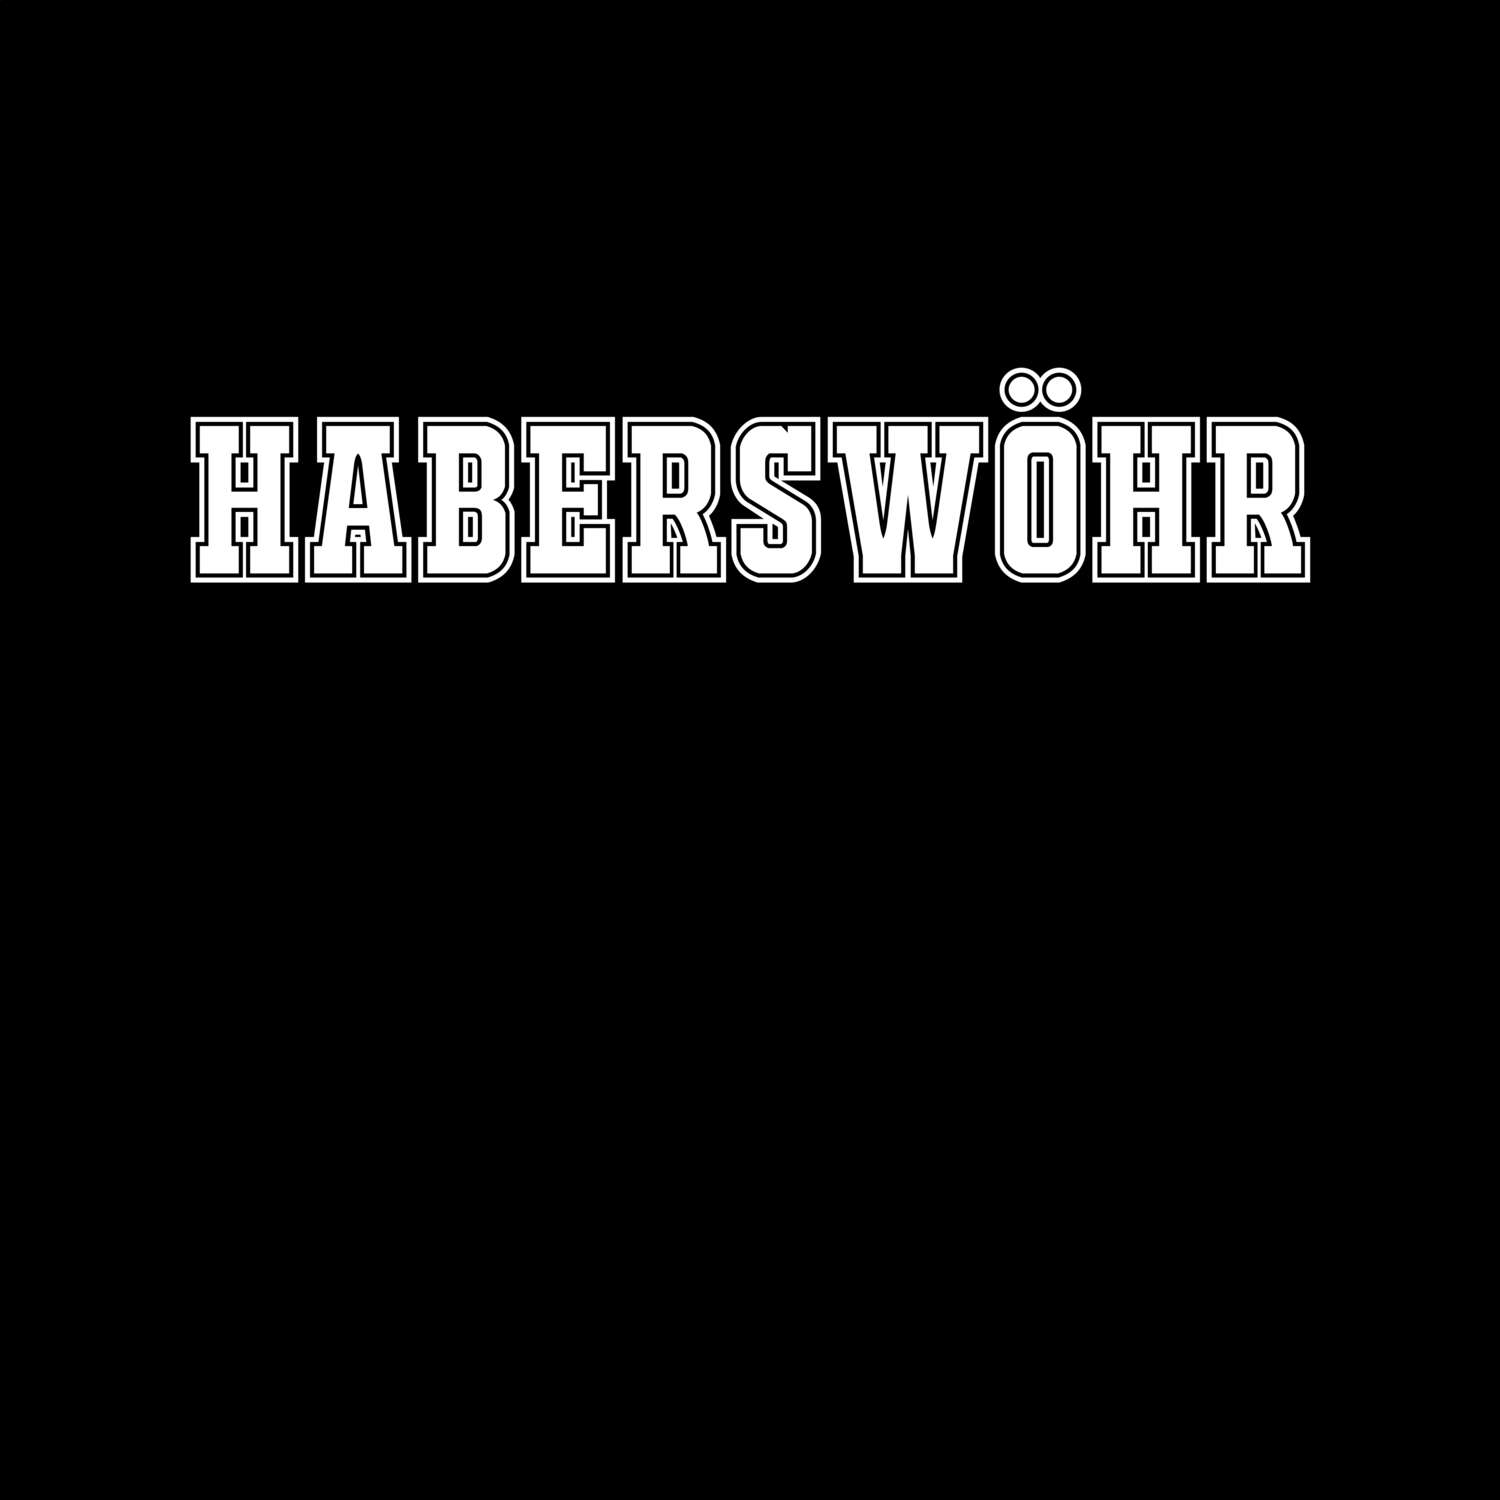 Haberswöhr T-Shirt »Classic«